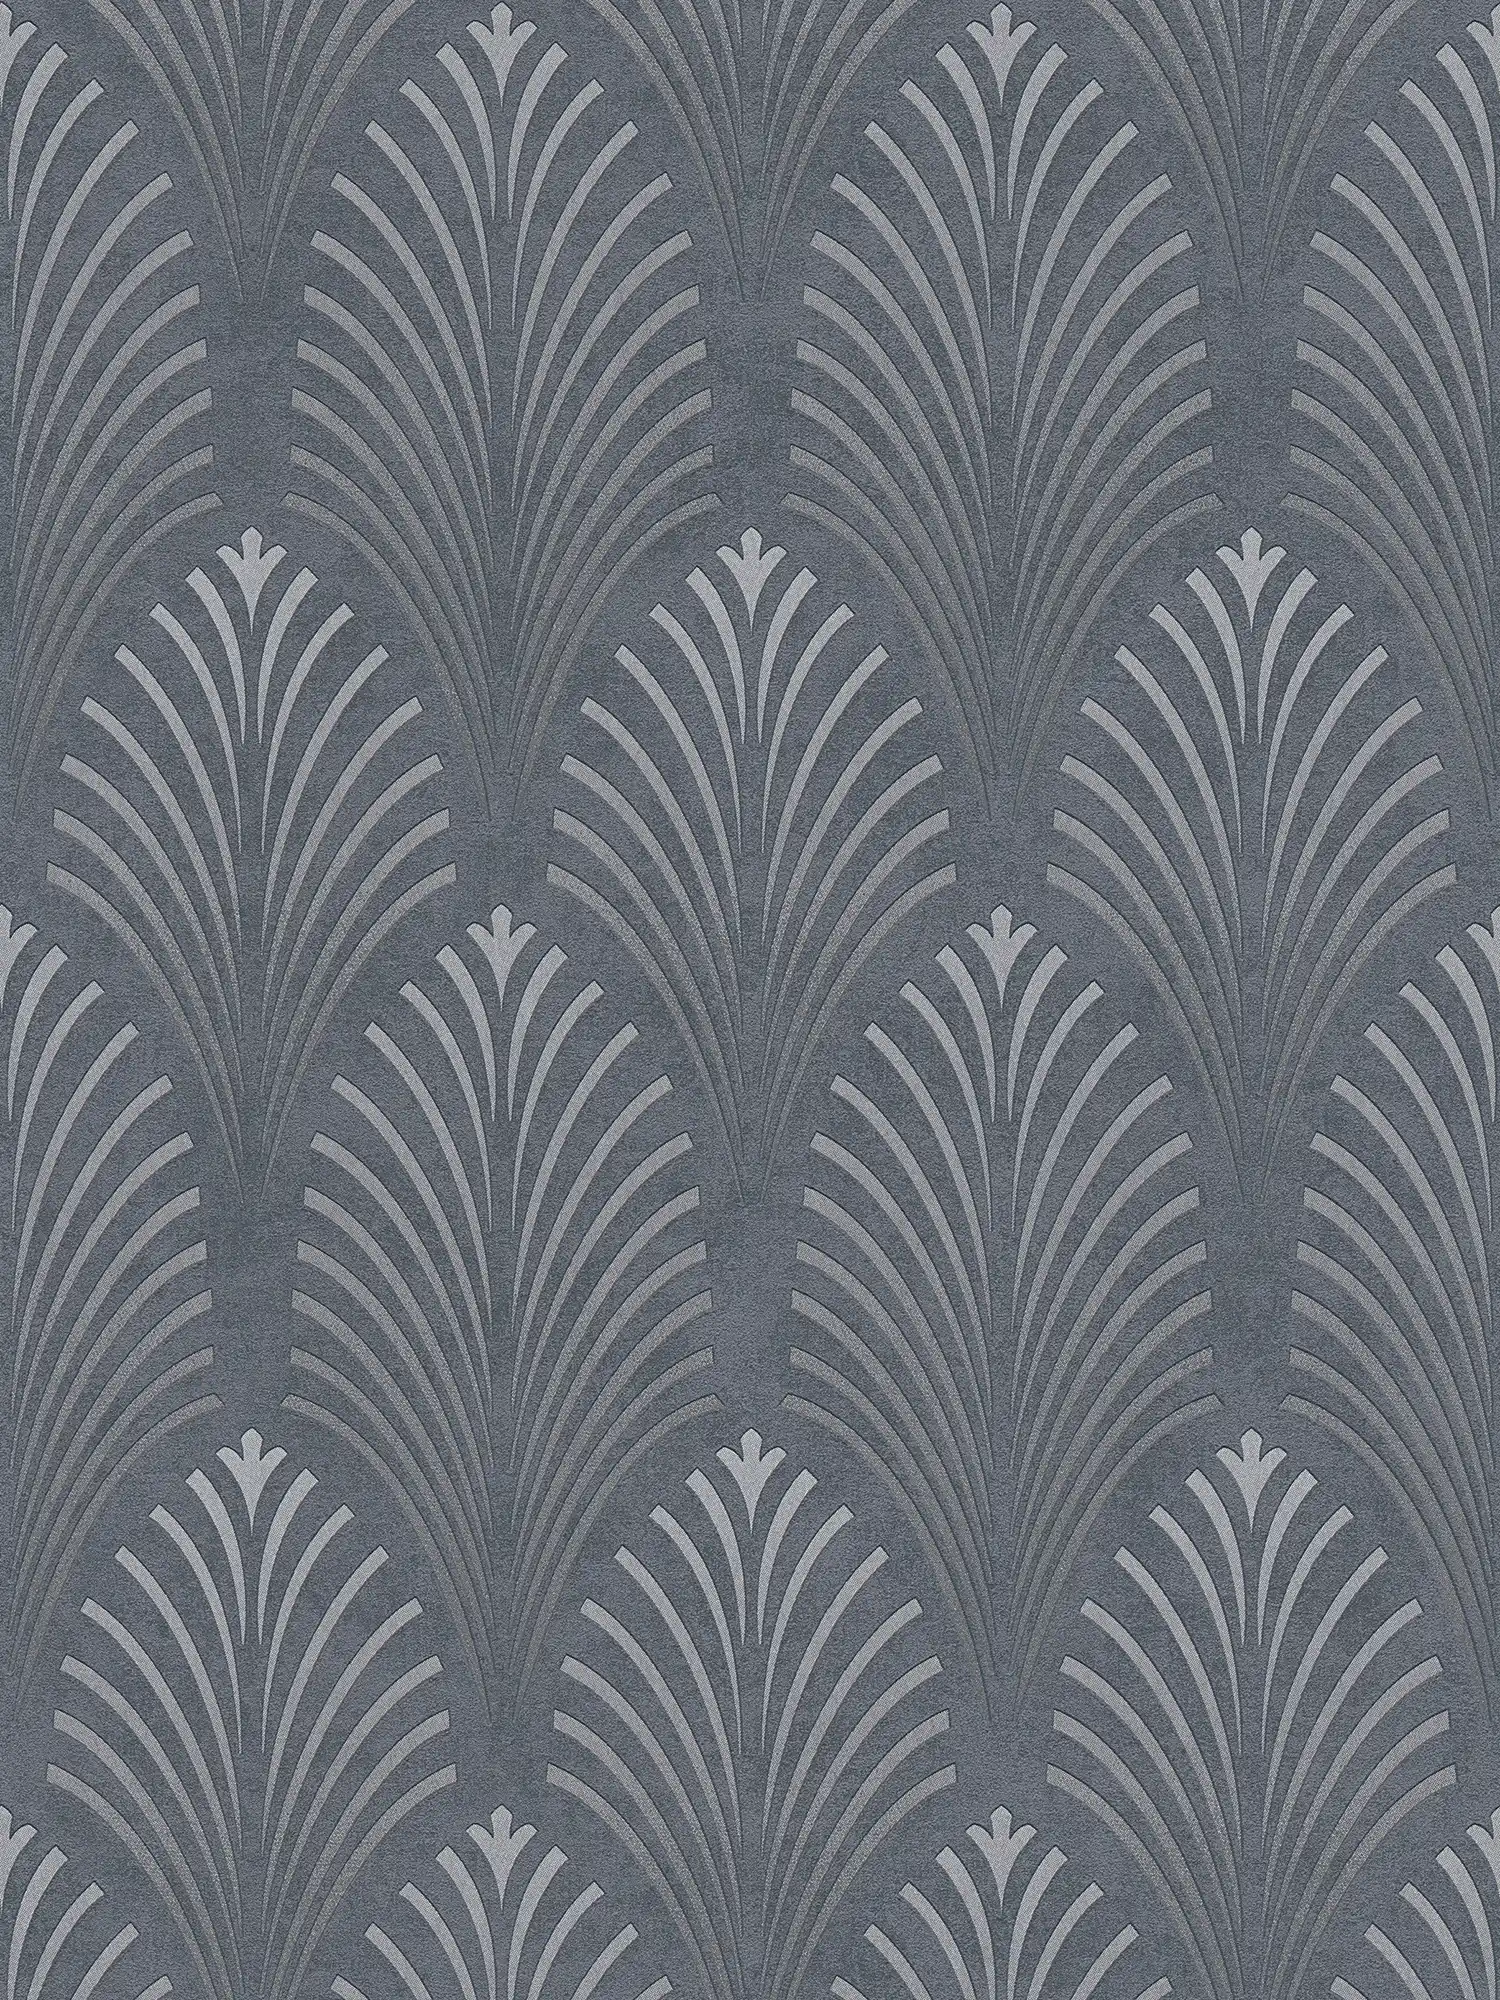 Retro wallpaper art deco style with geometric pattern - black, silver, grey
